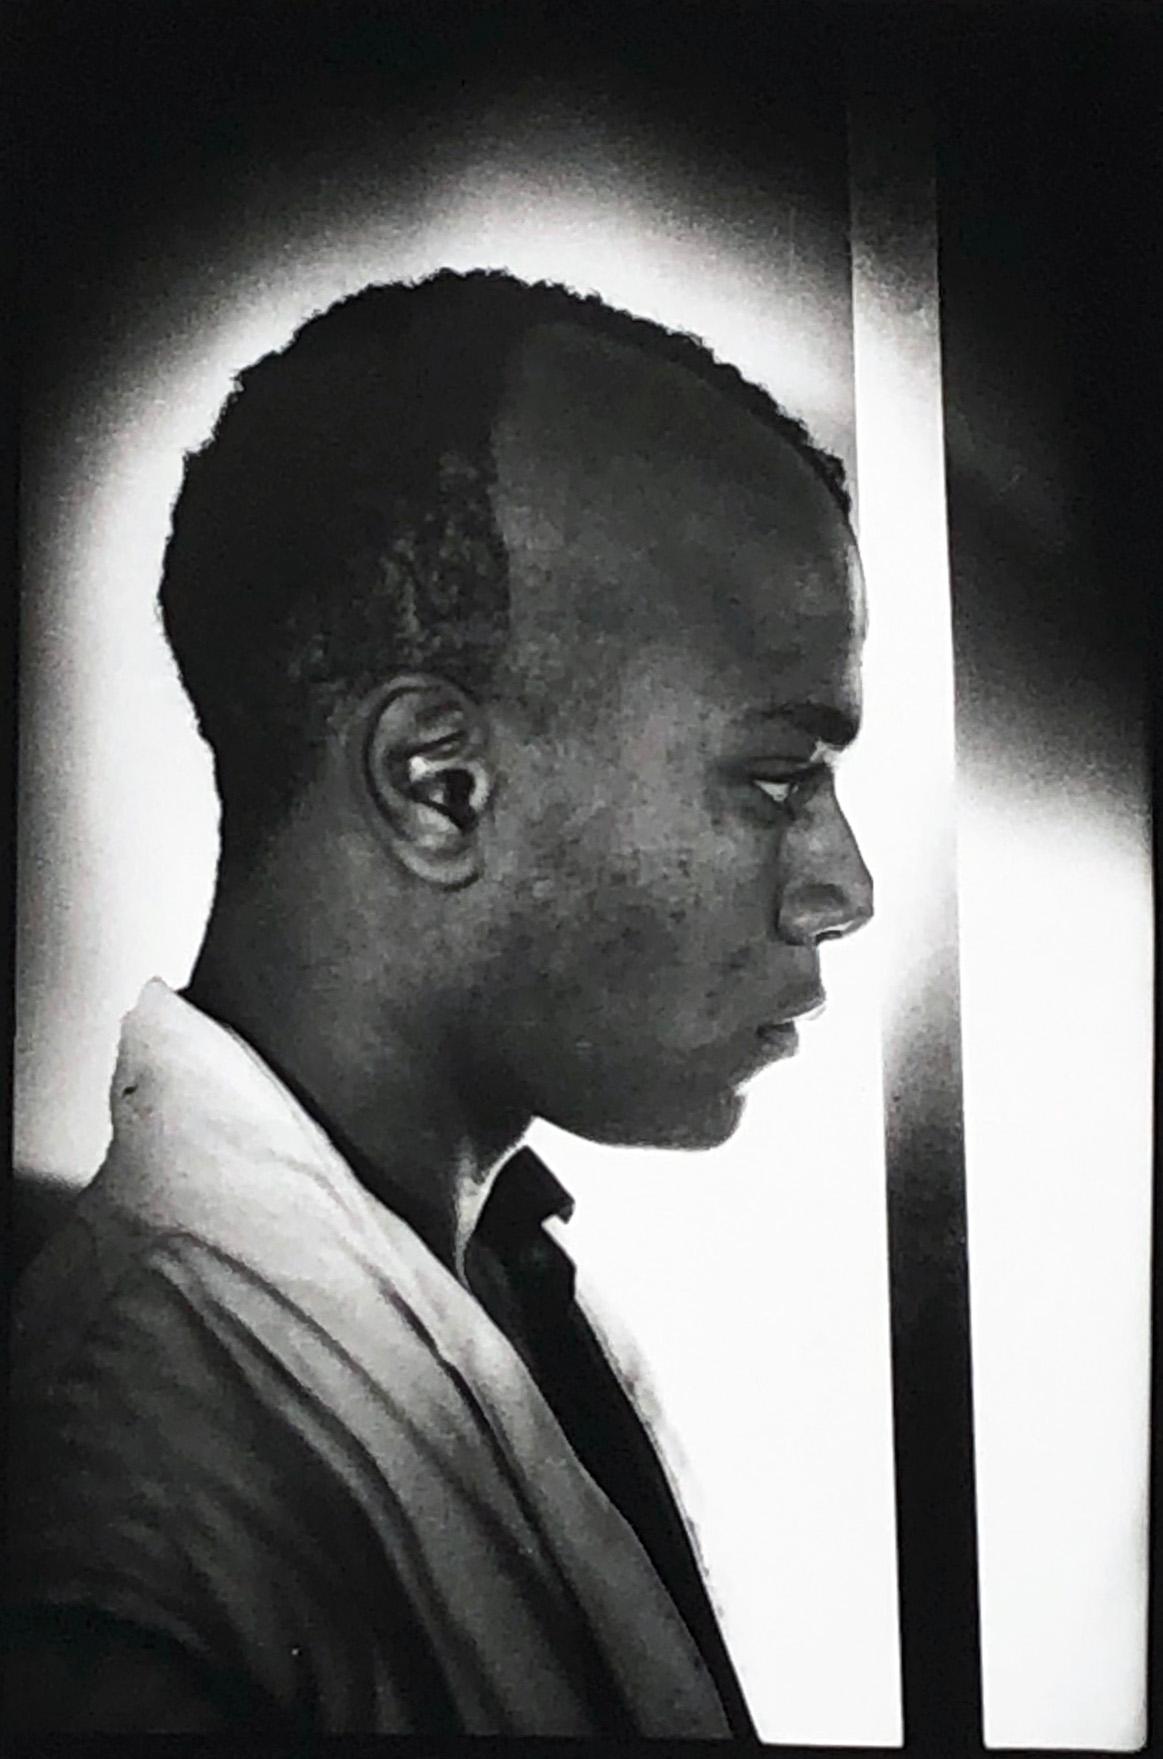 Nicholas Taylor Black and White Photograph - Rare Basquiat photograph (Basquiat Gray)